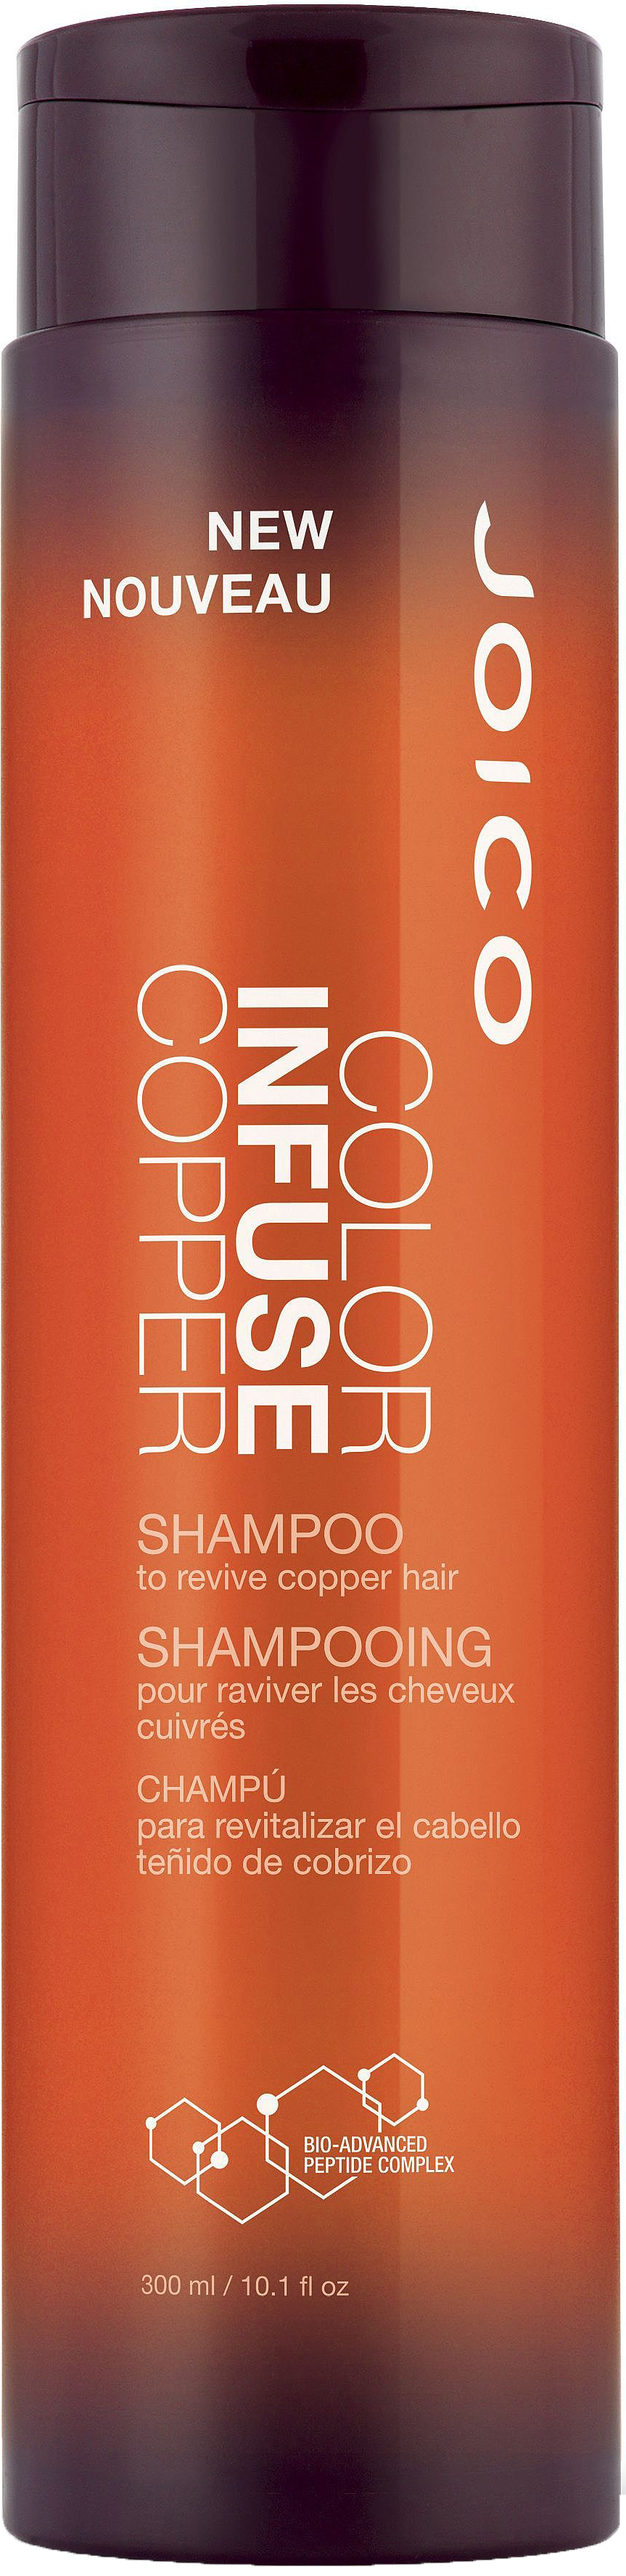 Joico Copper Shampoo 300ml